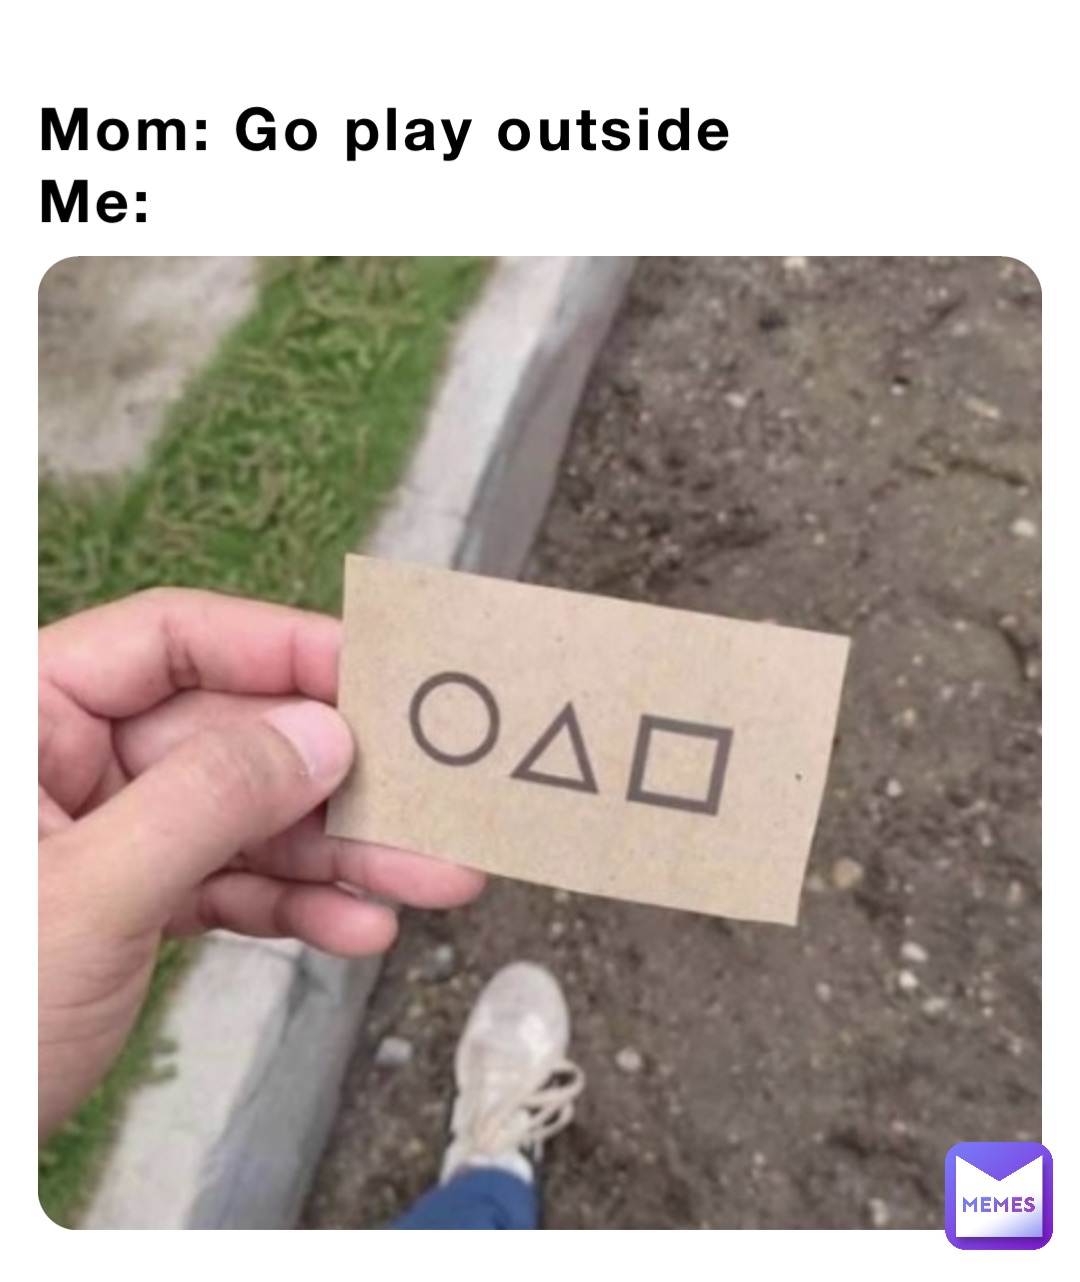 Mom: Go play outside
Me: